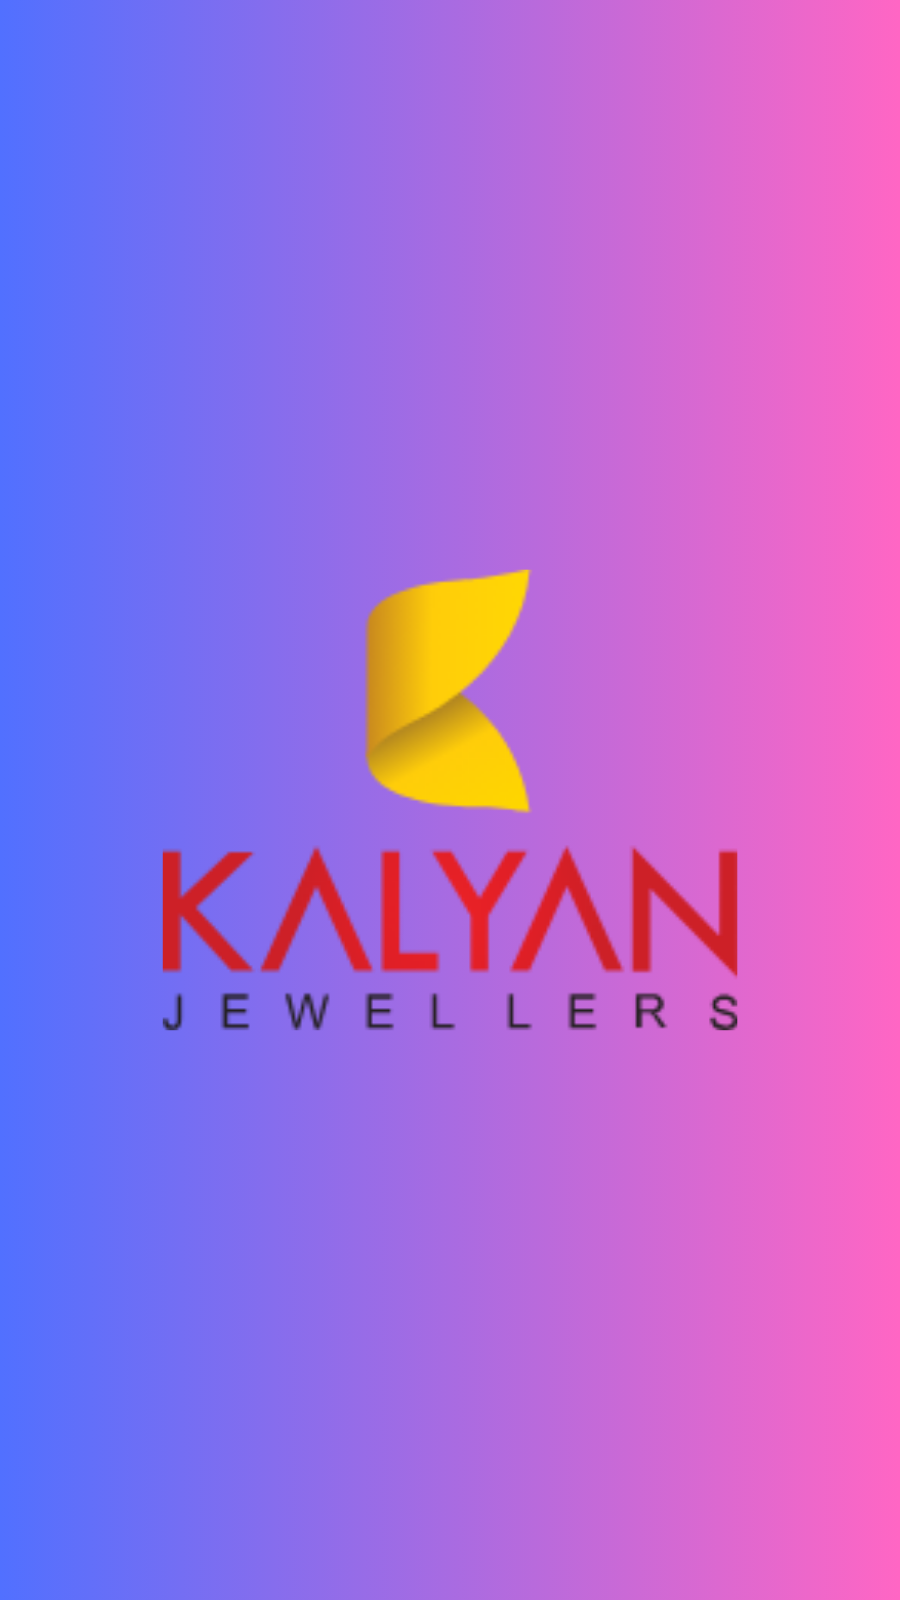 List of 20+ Best Kalyan Jewellers Brand Slogans | Advertising slogans,  Slogan, Jewels